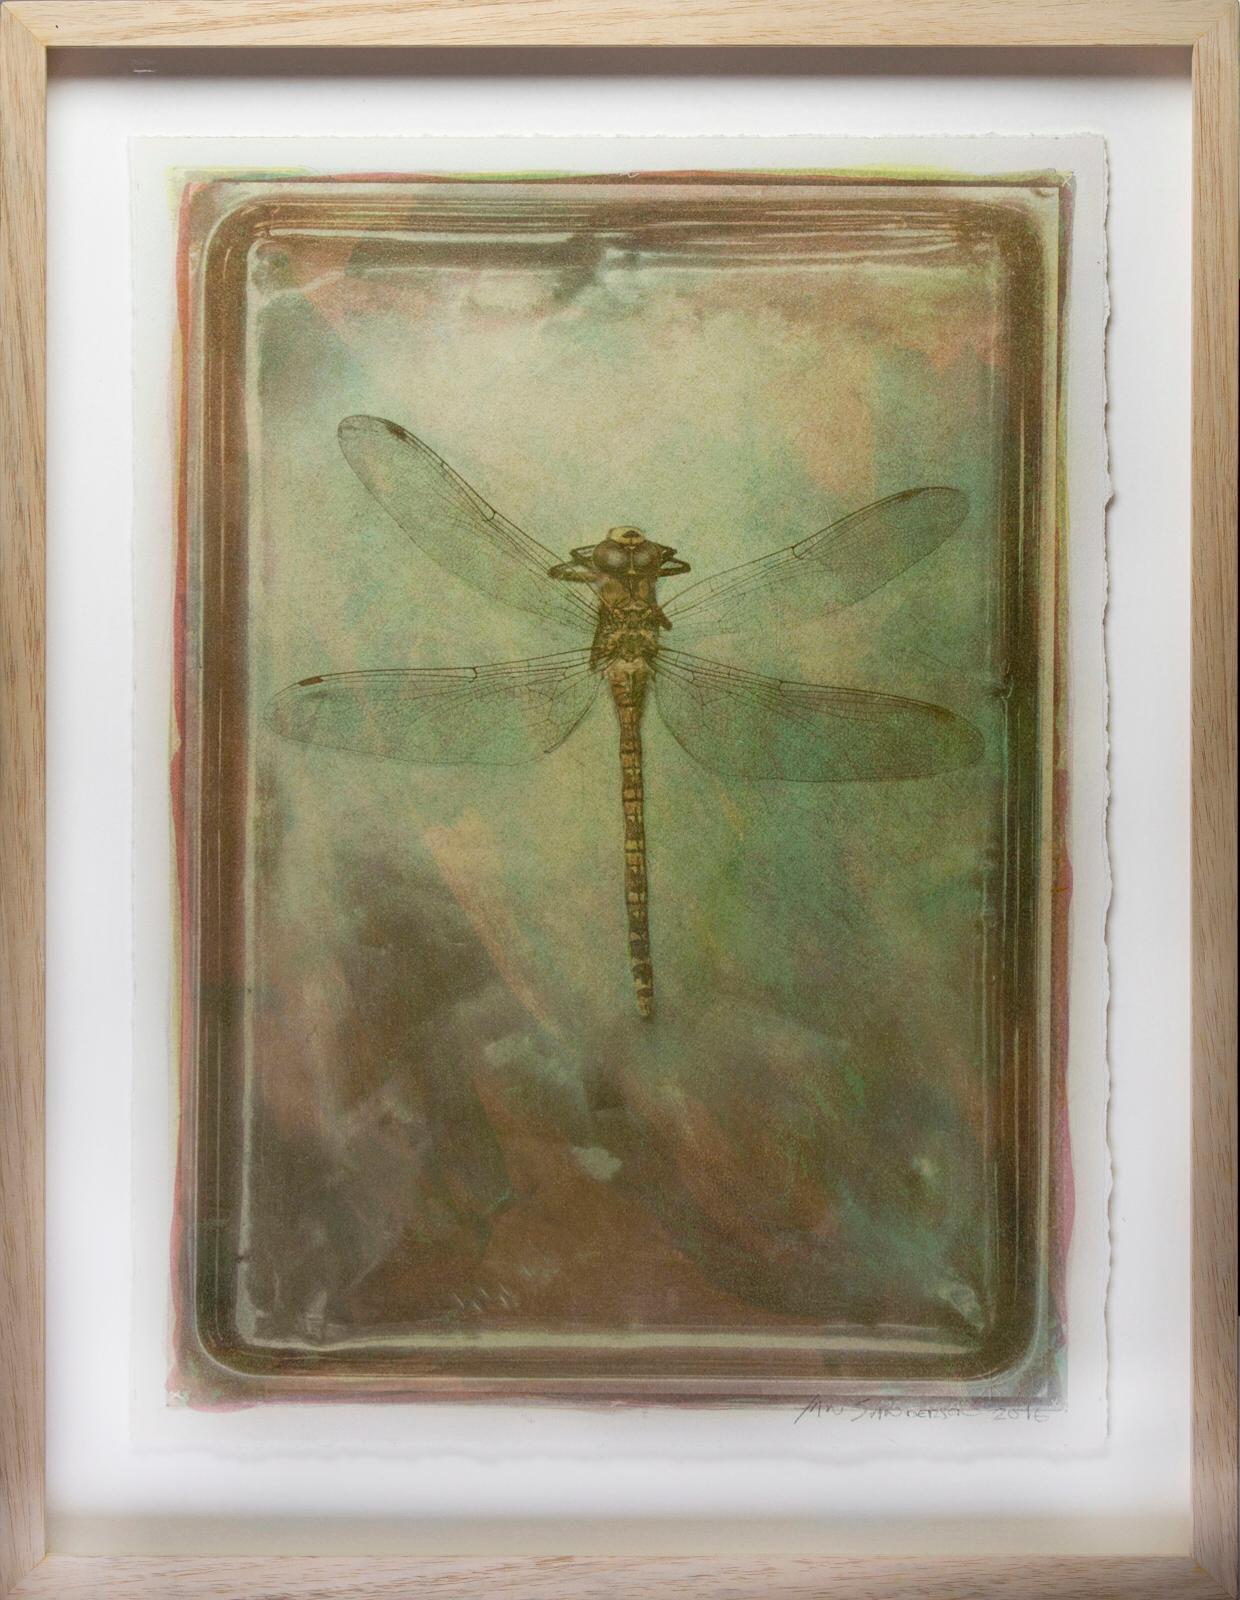 Dragonfly-Unique Gum Bichromate print(sensitised watercolour), Photographic print (Braun), Still-Life Photograph, von Ian Sanderson